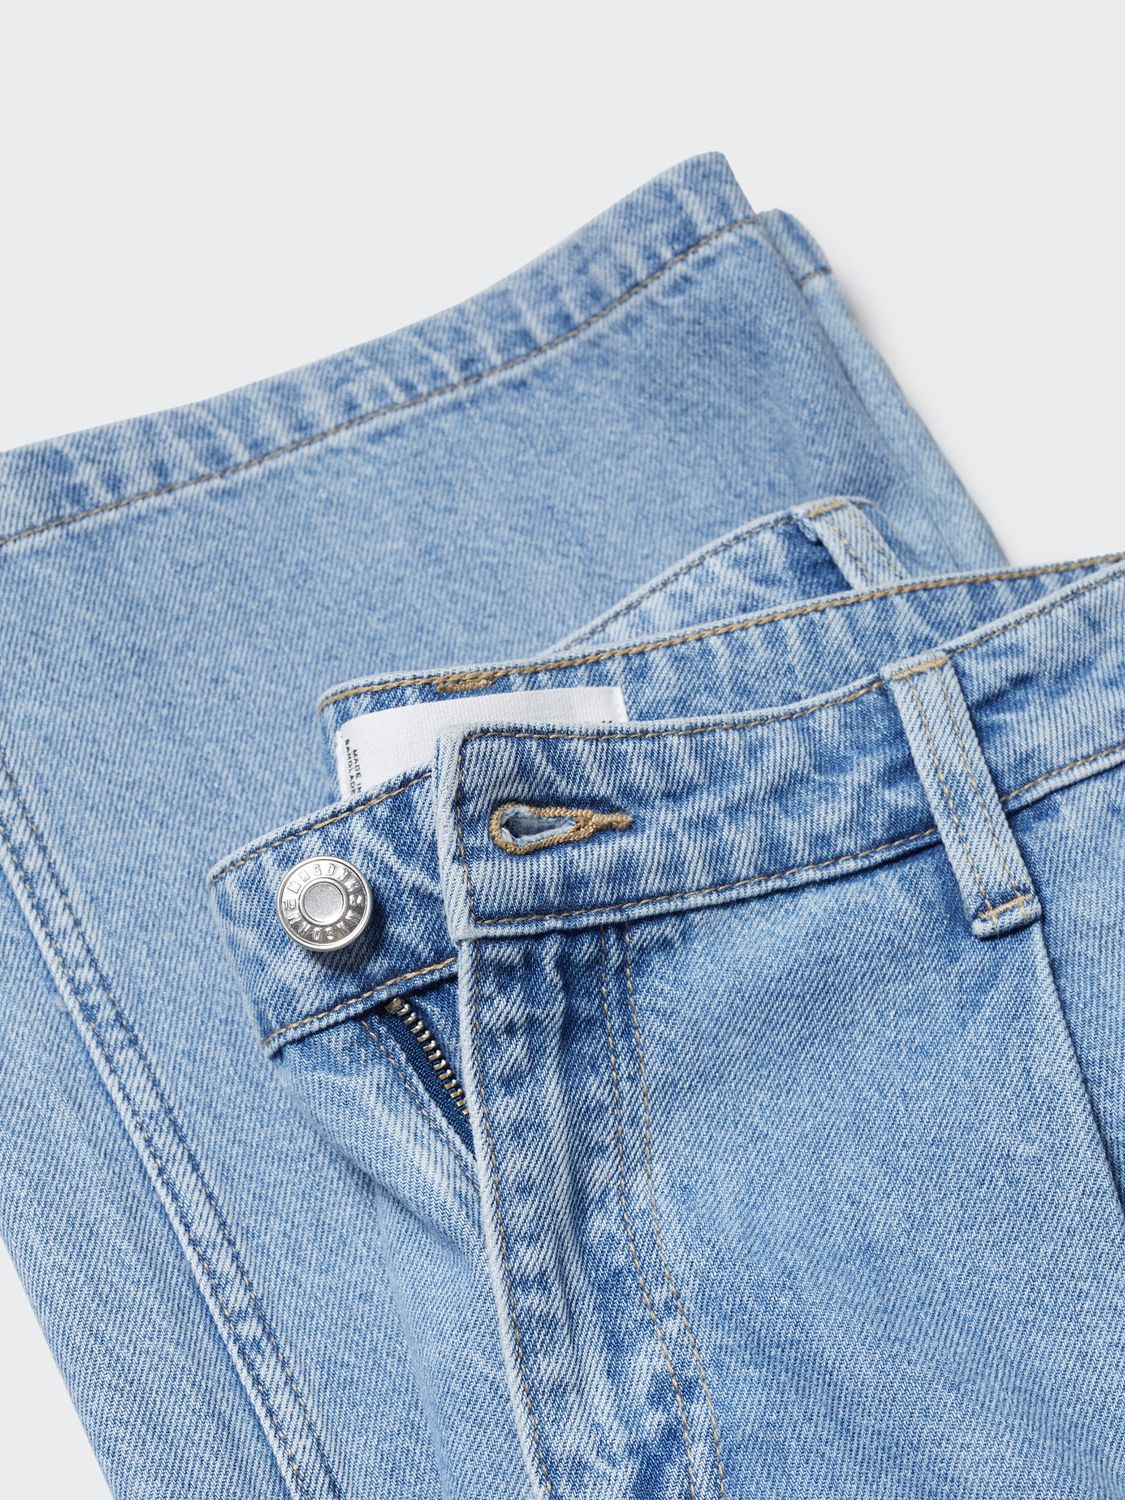 Mango Arletita Straight Pleated Jeans, Open Blue at John Lewis & Partners